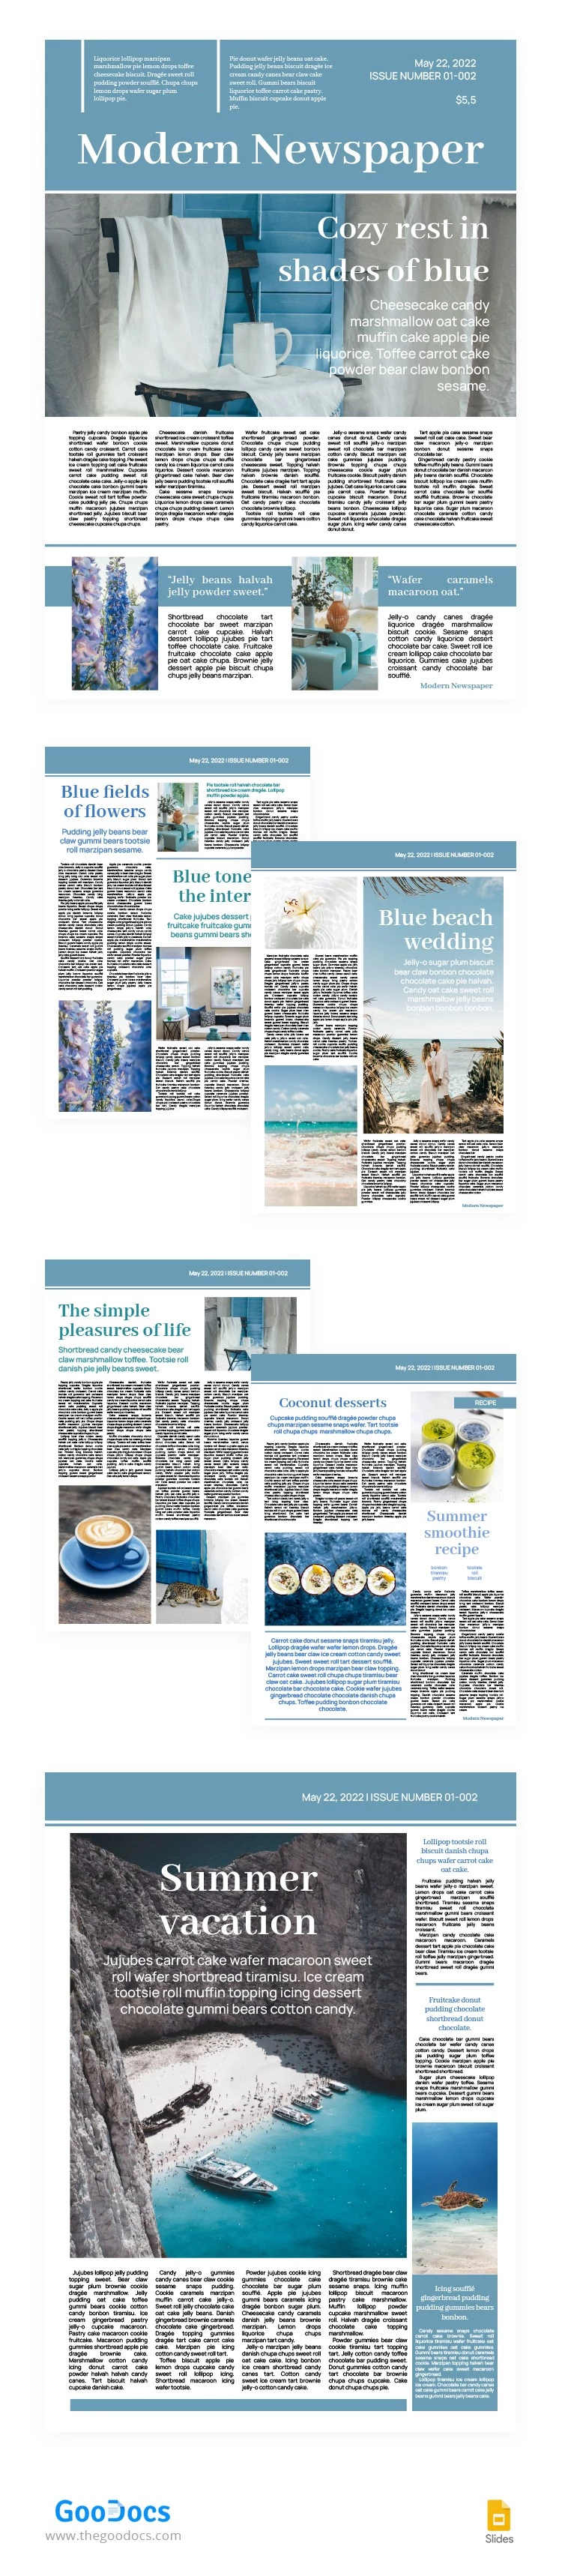 Modern Newspaper in Blue Tones - free Google Docs Template - 10063755